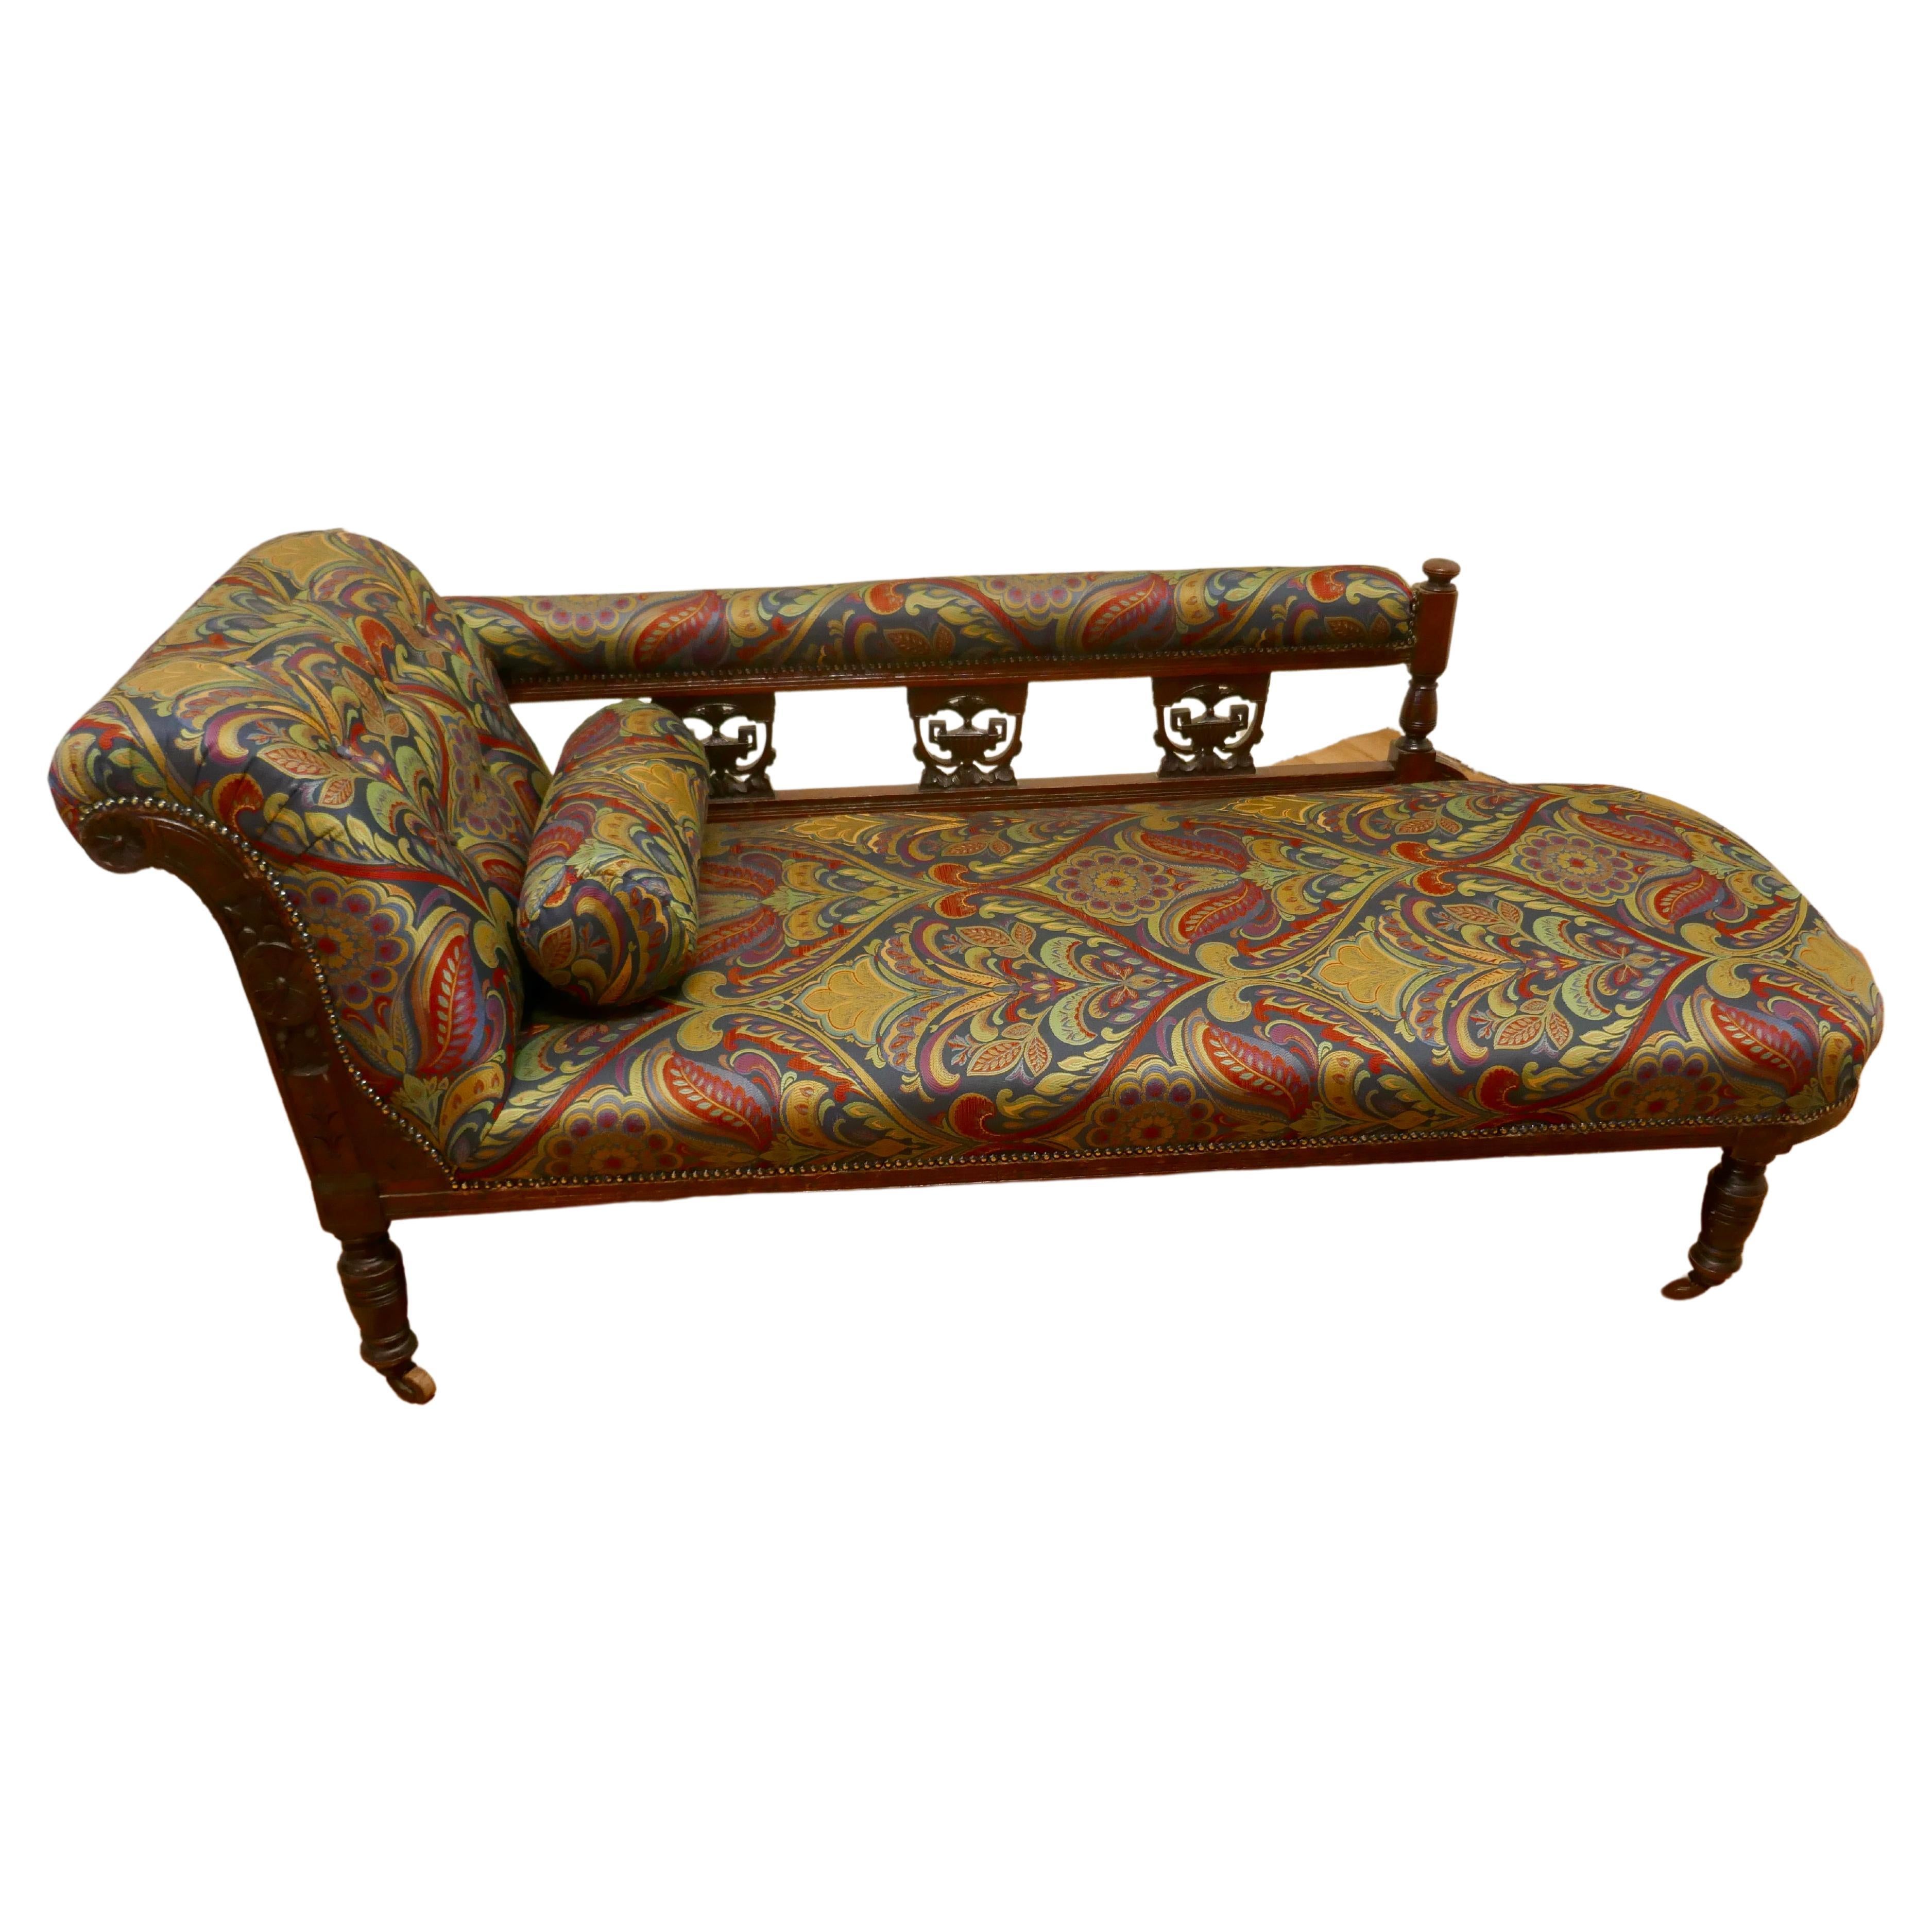 Victorian Art Nouveau Upholstered Chaise Longue For Sale